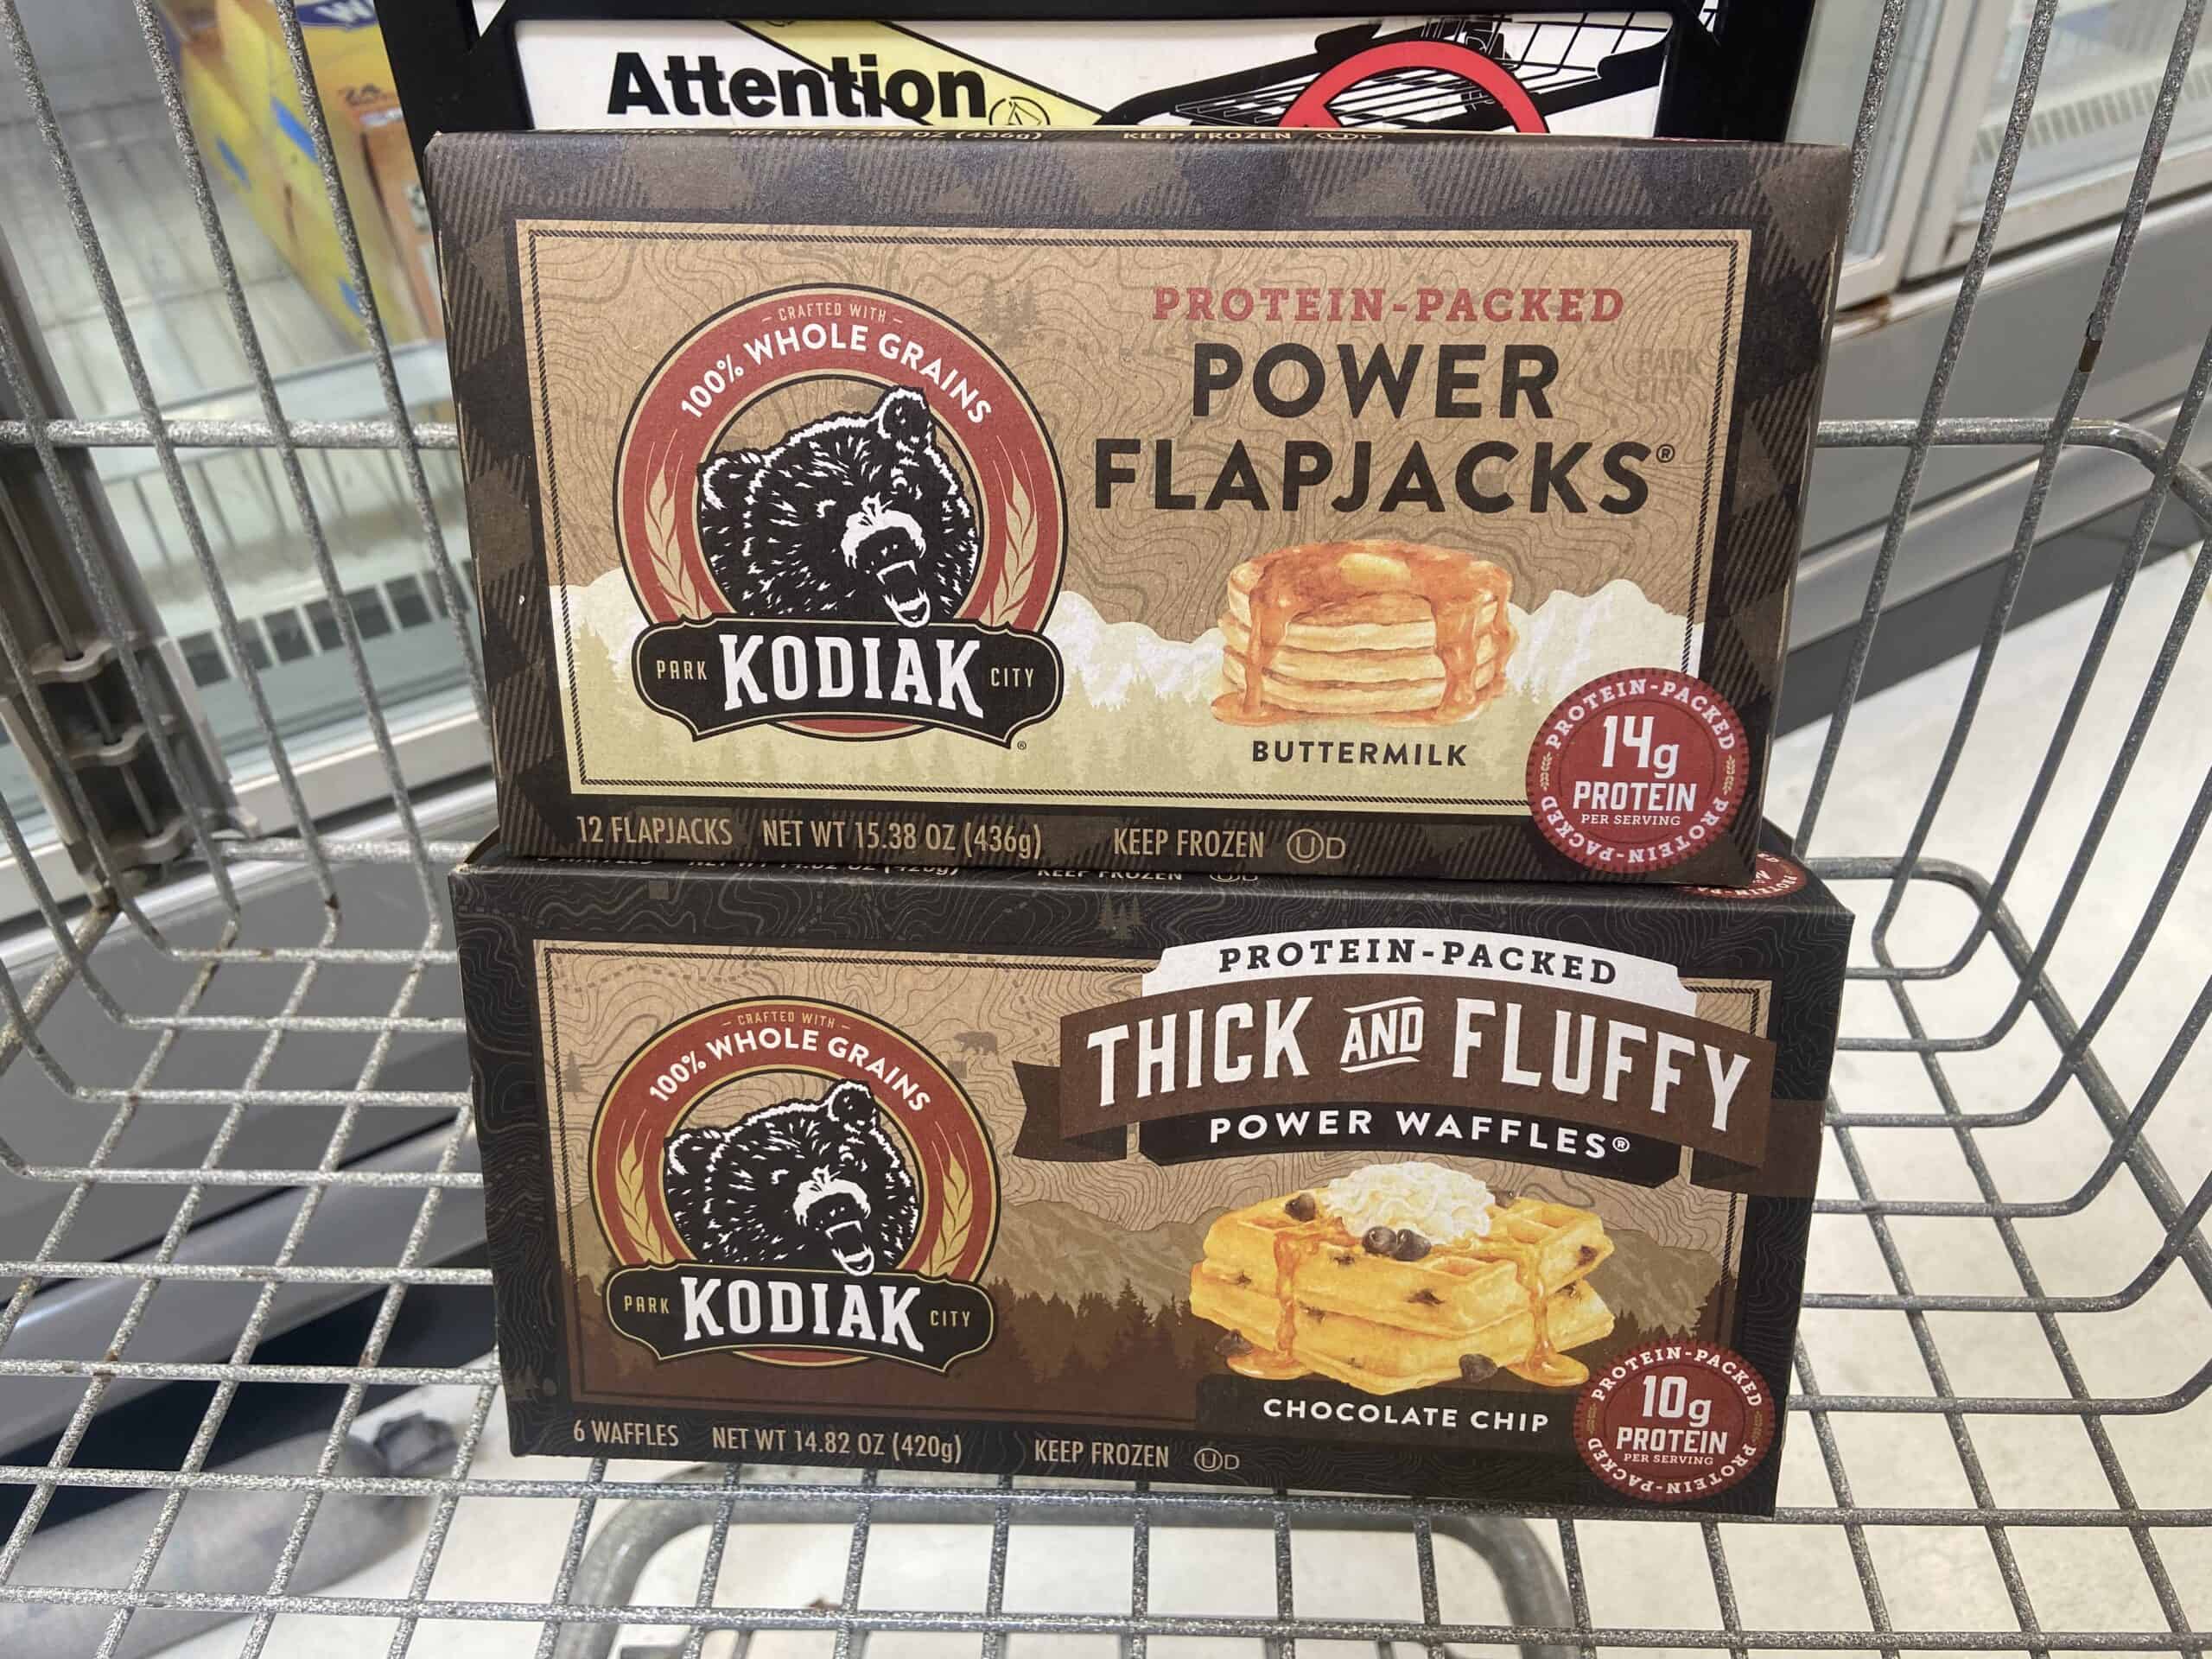 Giant-Deal-on-Kodiak-Cakes-Waffles-or-Flapjacks